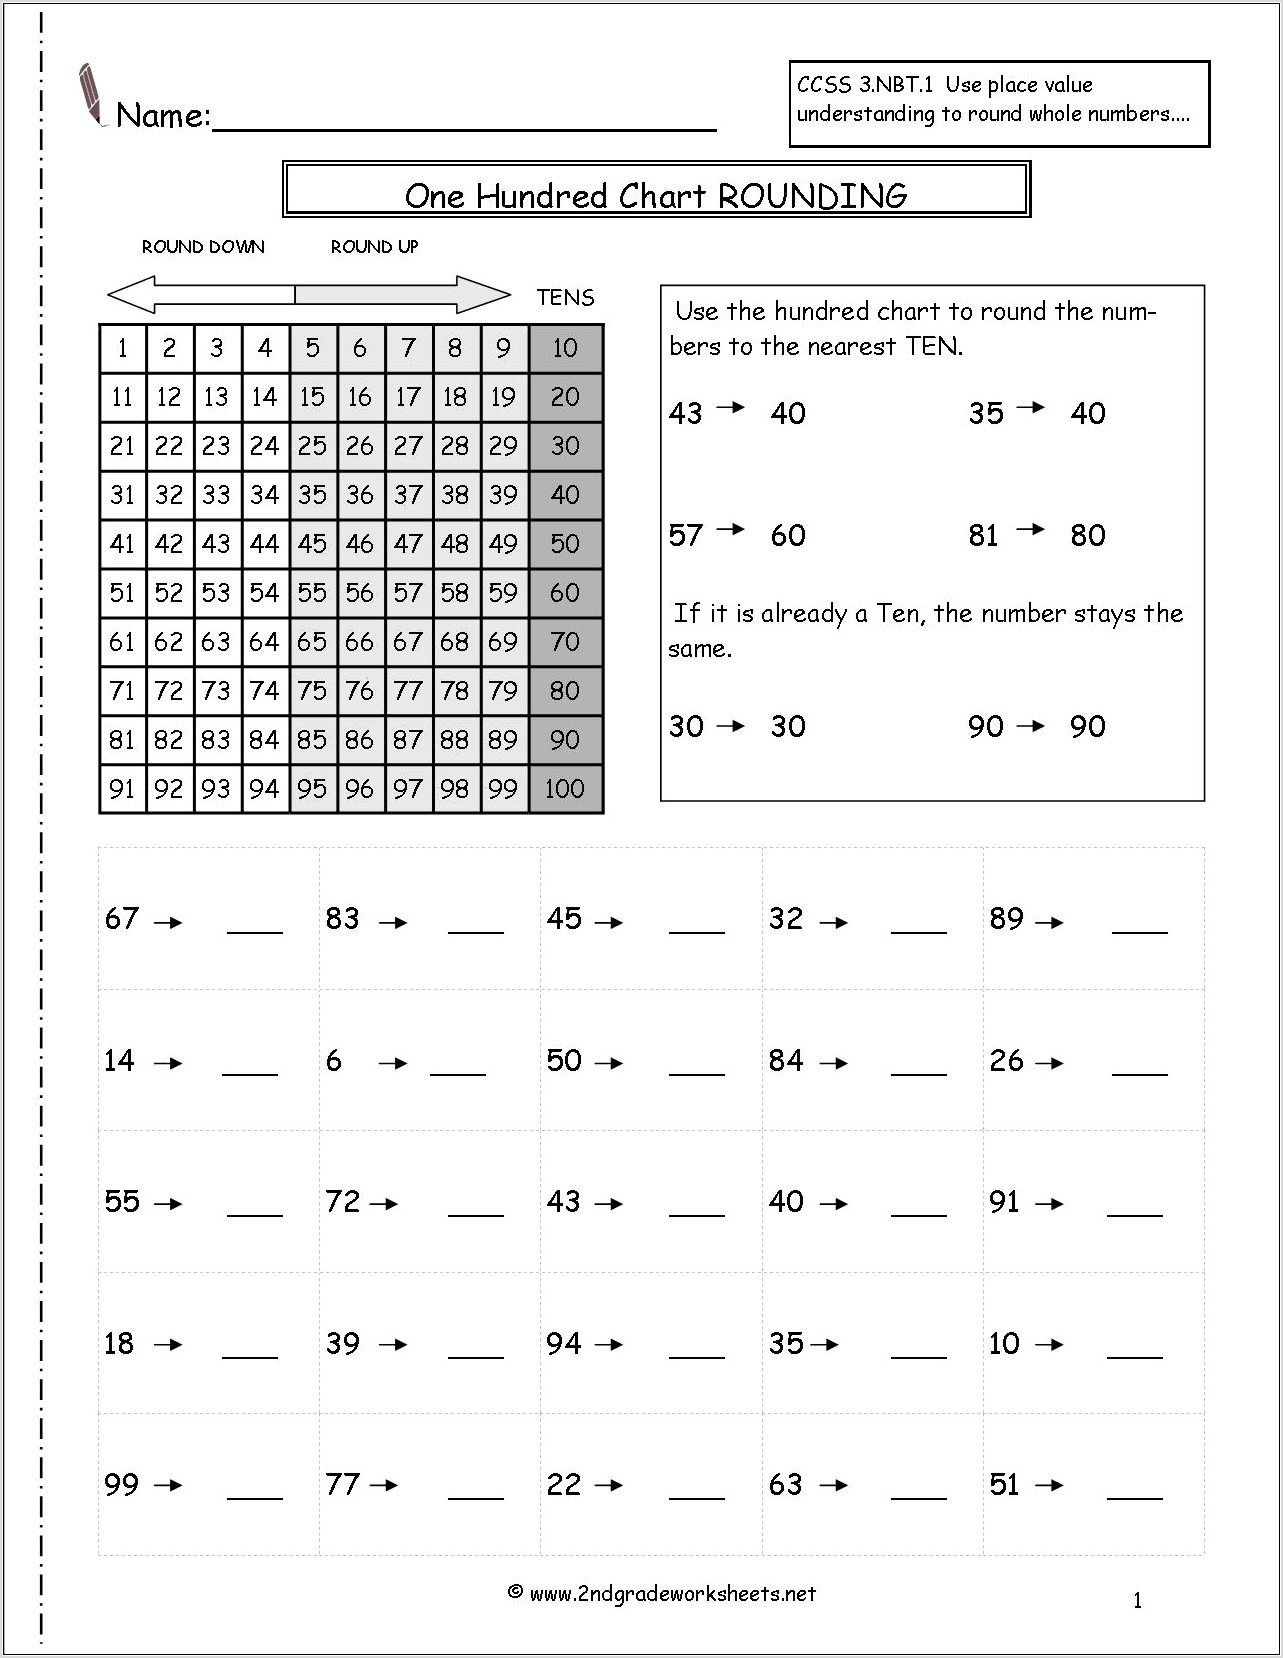 rounding-numbers-math-worksheets-worksheet-restiumani-resume